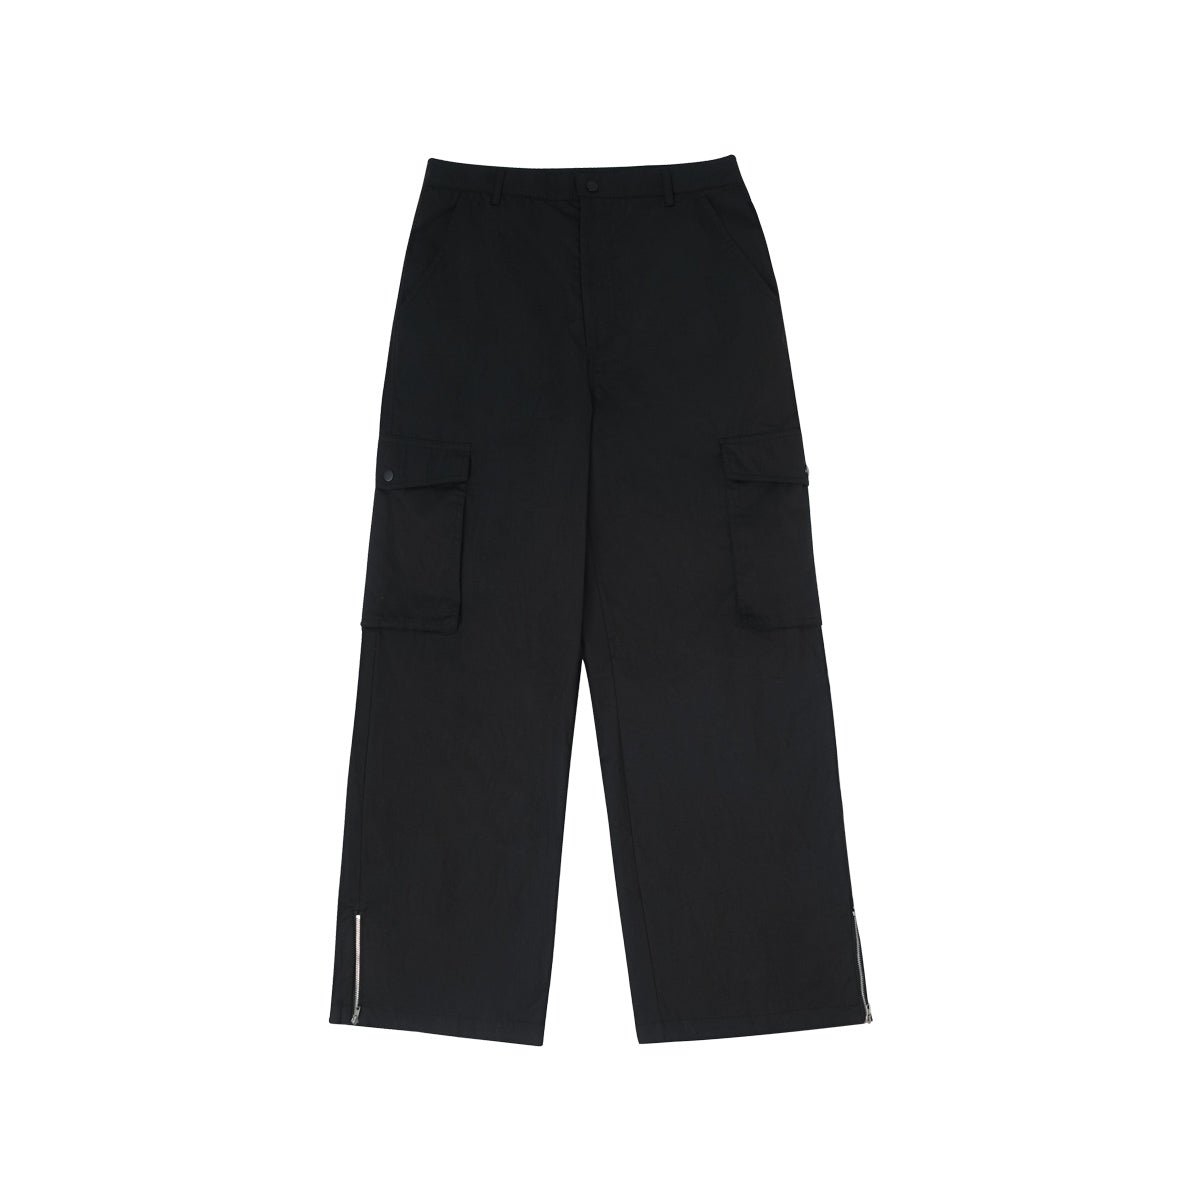 Exaggerated Pocket Baggy Fit Zip Hem Black Cargo Pants - 0cm